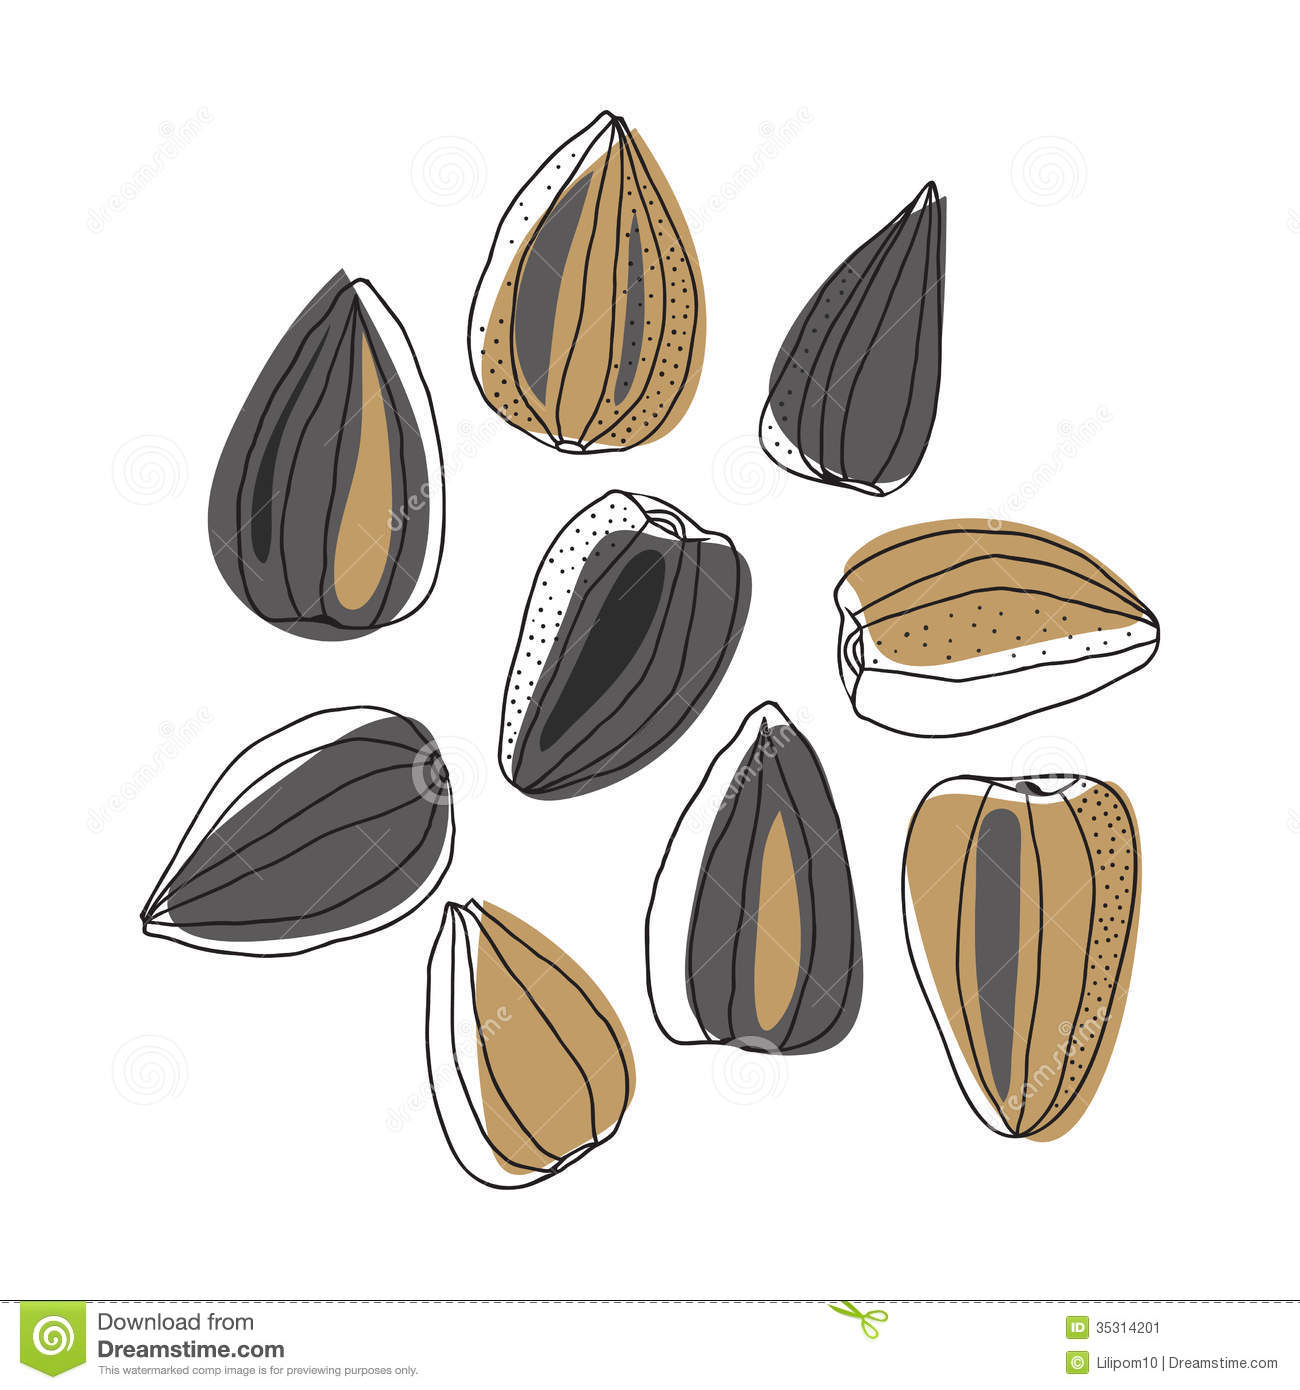 Illustration Of Sunflower Seeds Stock Image   Image  35314201